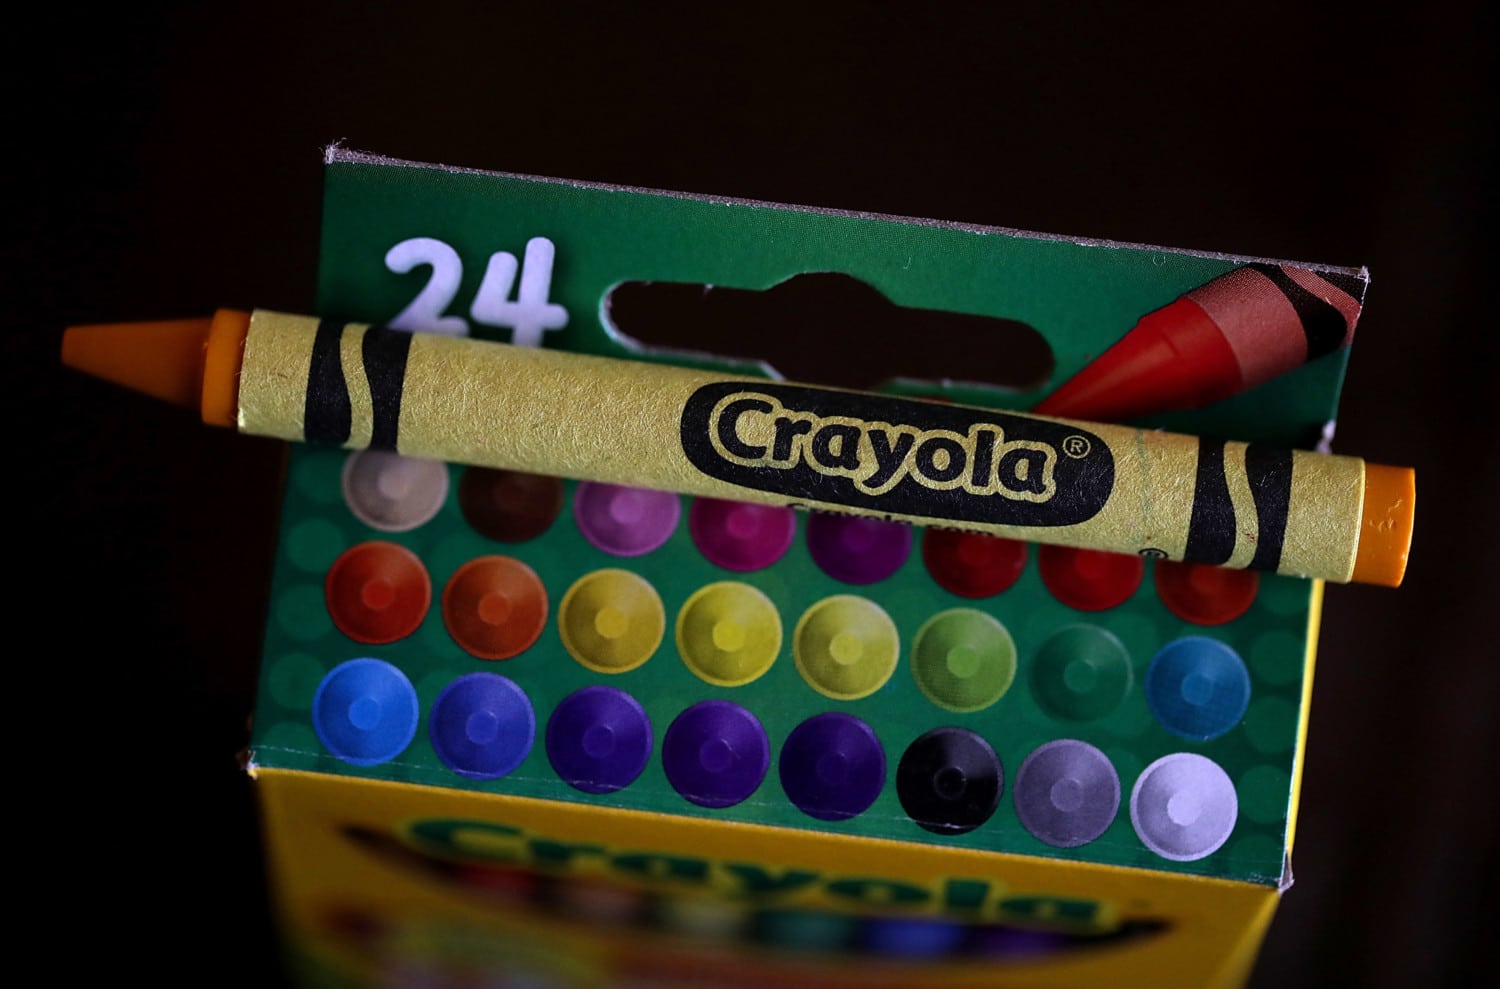 Crayola Color Pencils Assorted Colors Box Of 24 Color Pencils - Office Depot